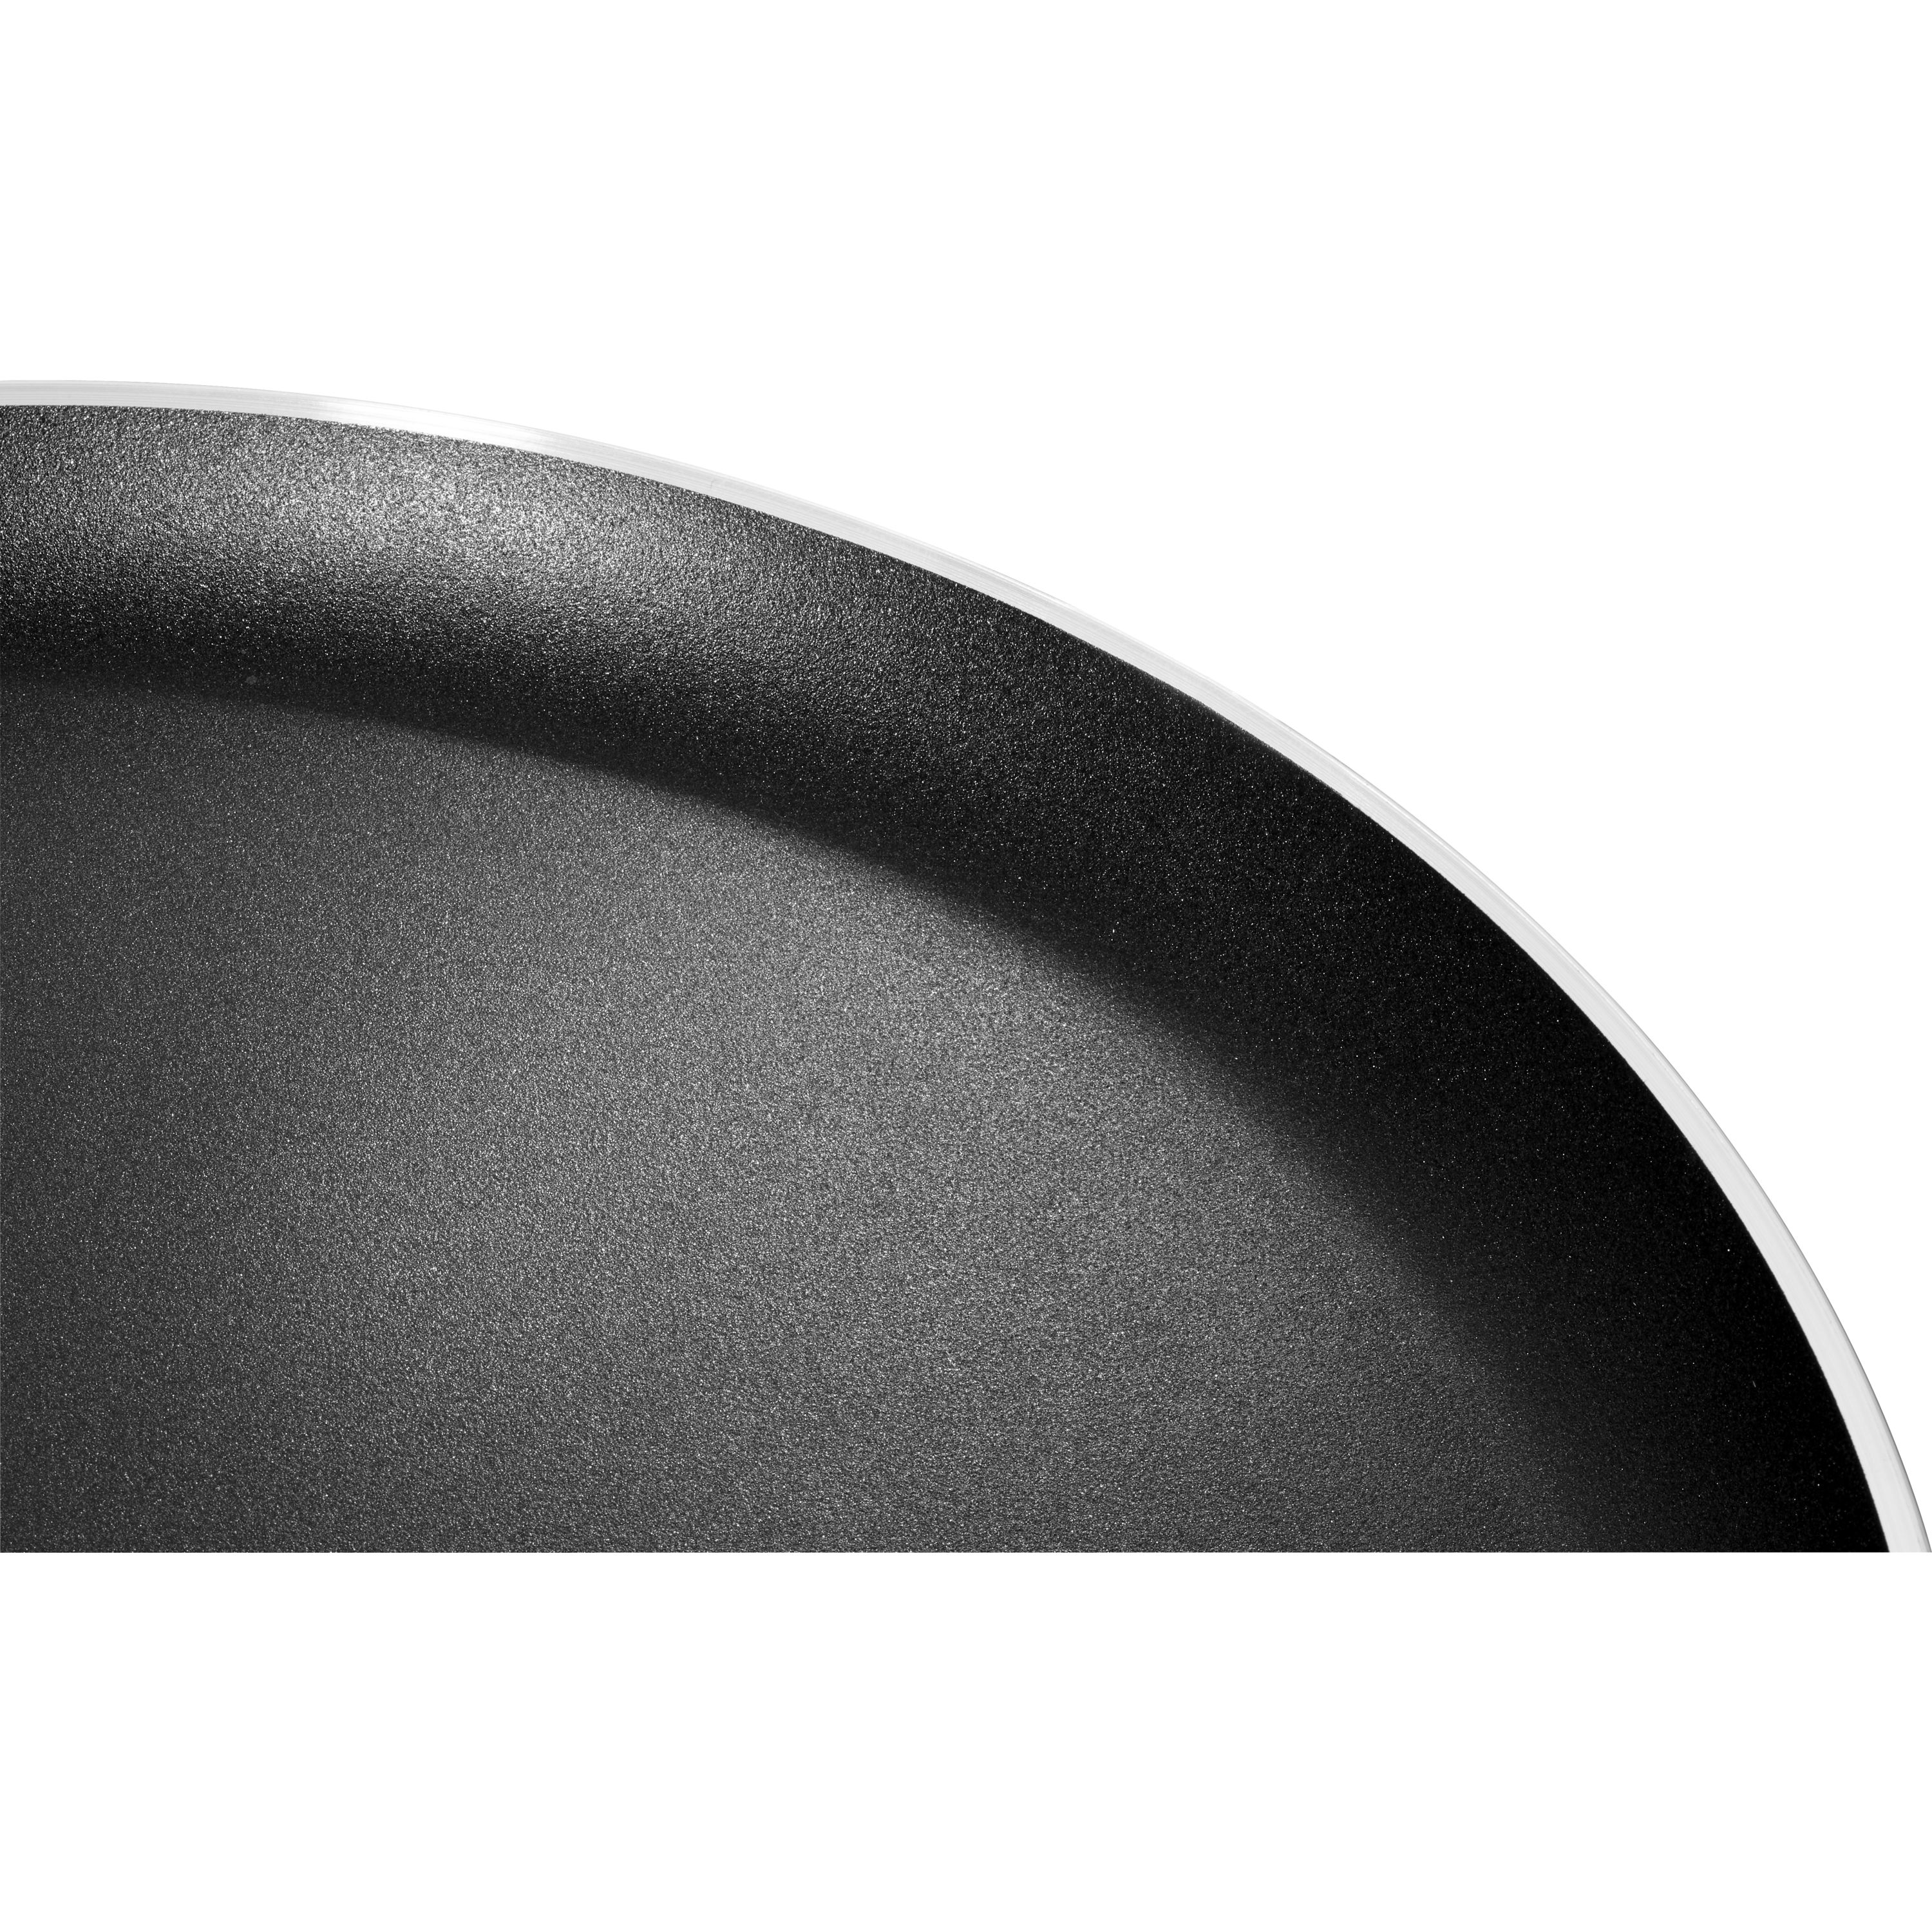 Cookware & More - Ballarini Cookin' Italy 10 Nonstick Crepe Pan (75000-663)